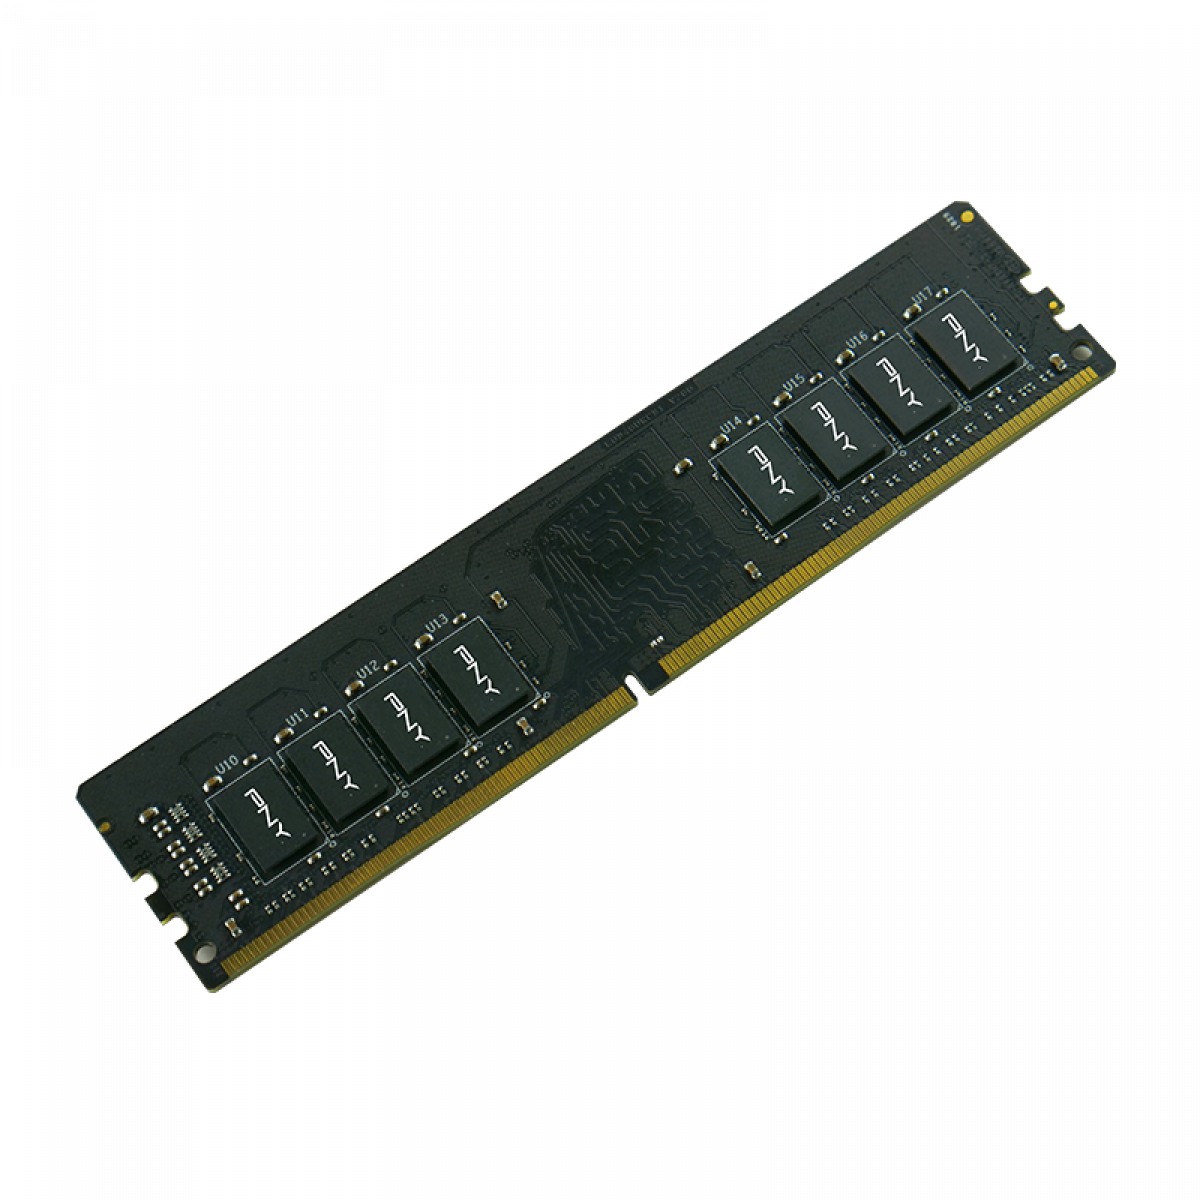 PNY 8GB DDR4 2666MHz